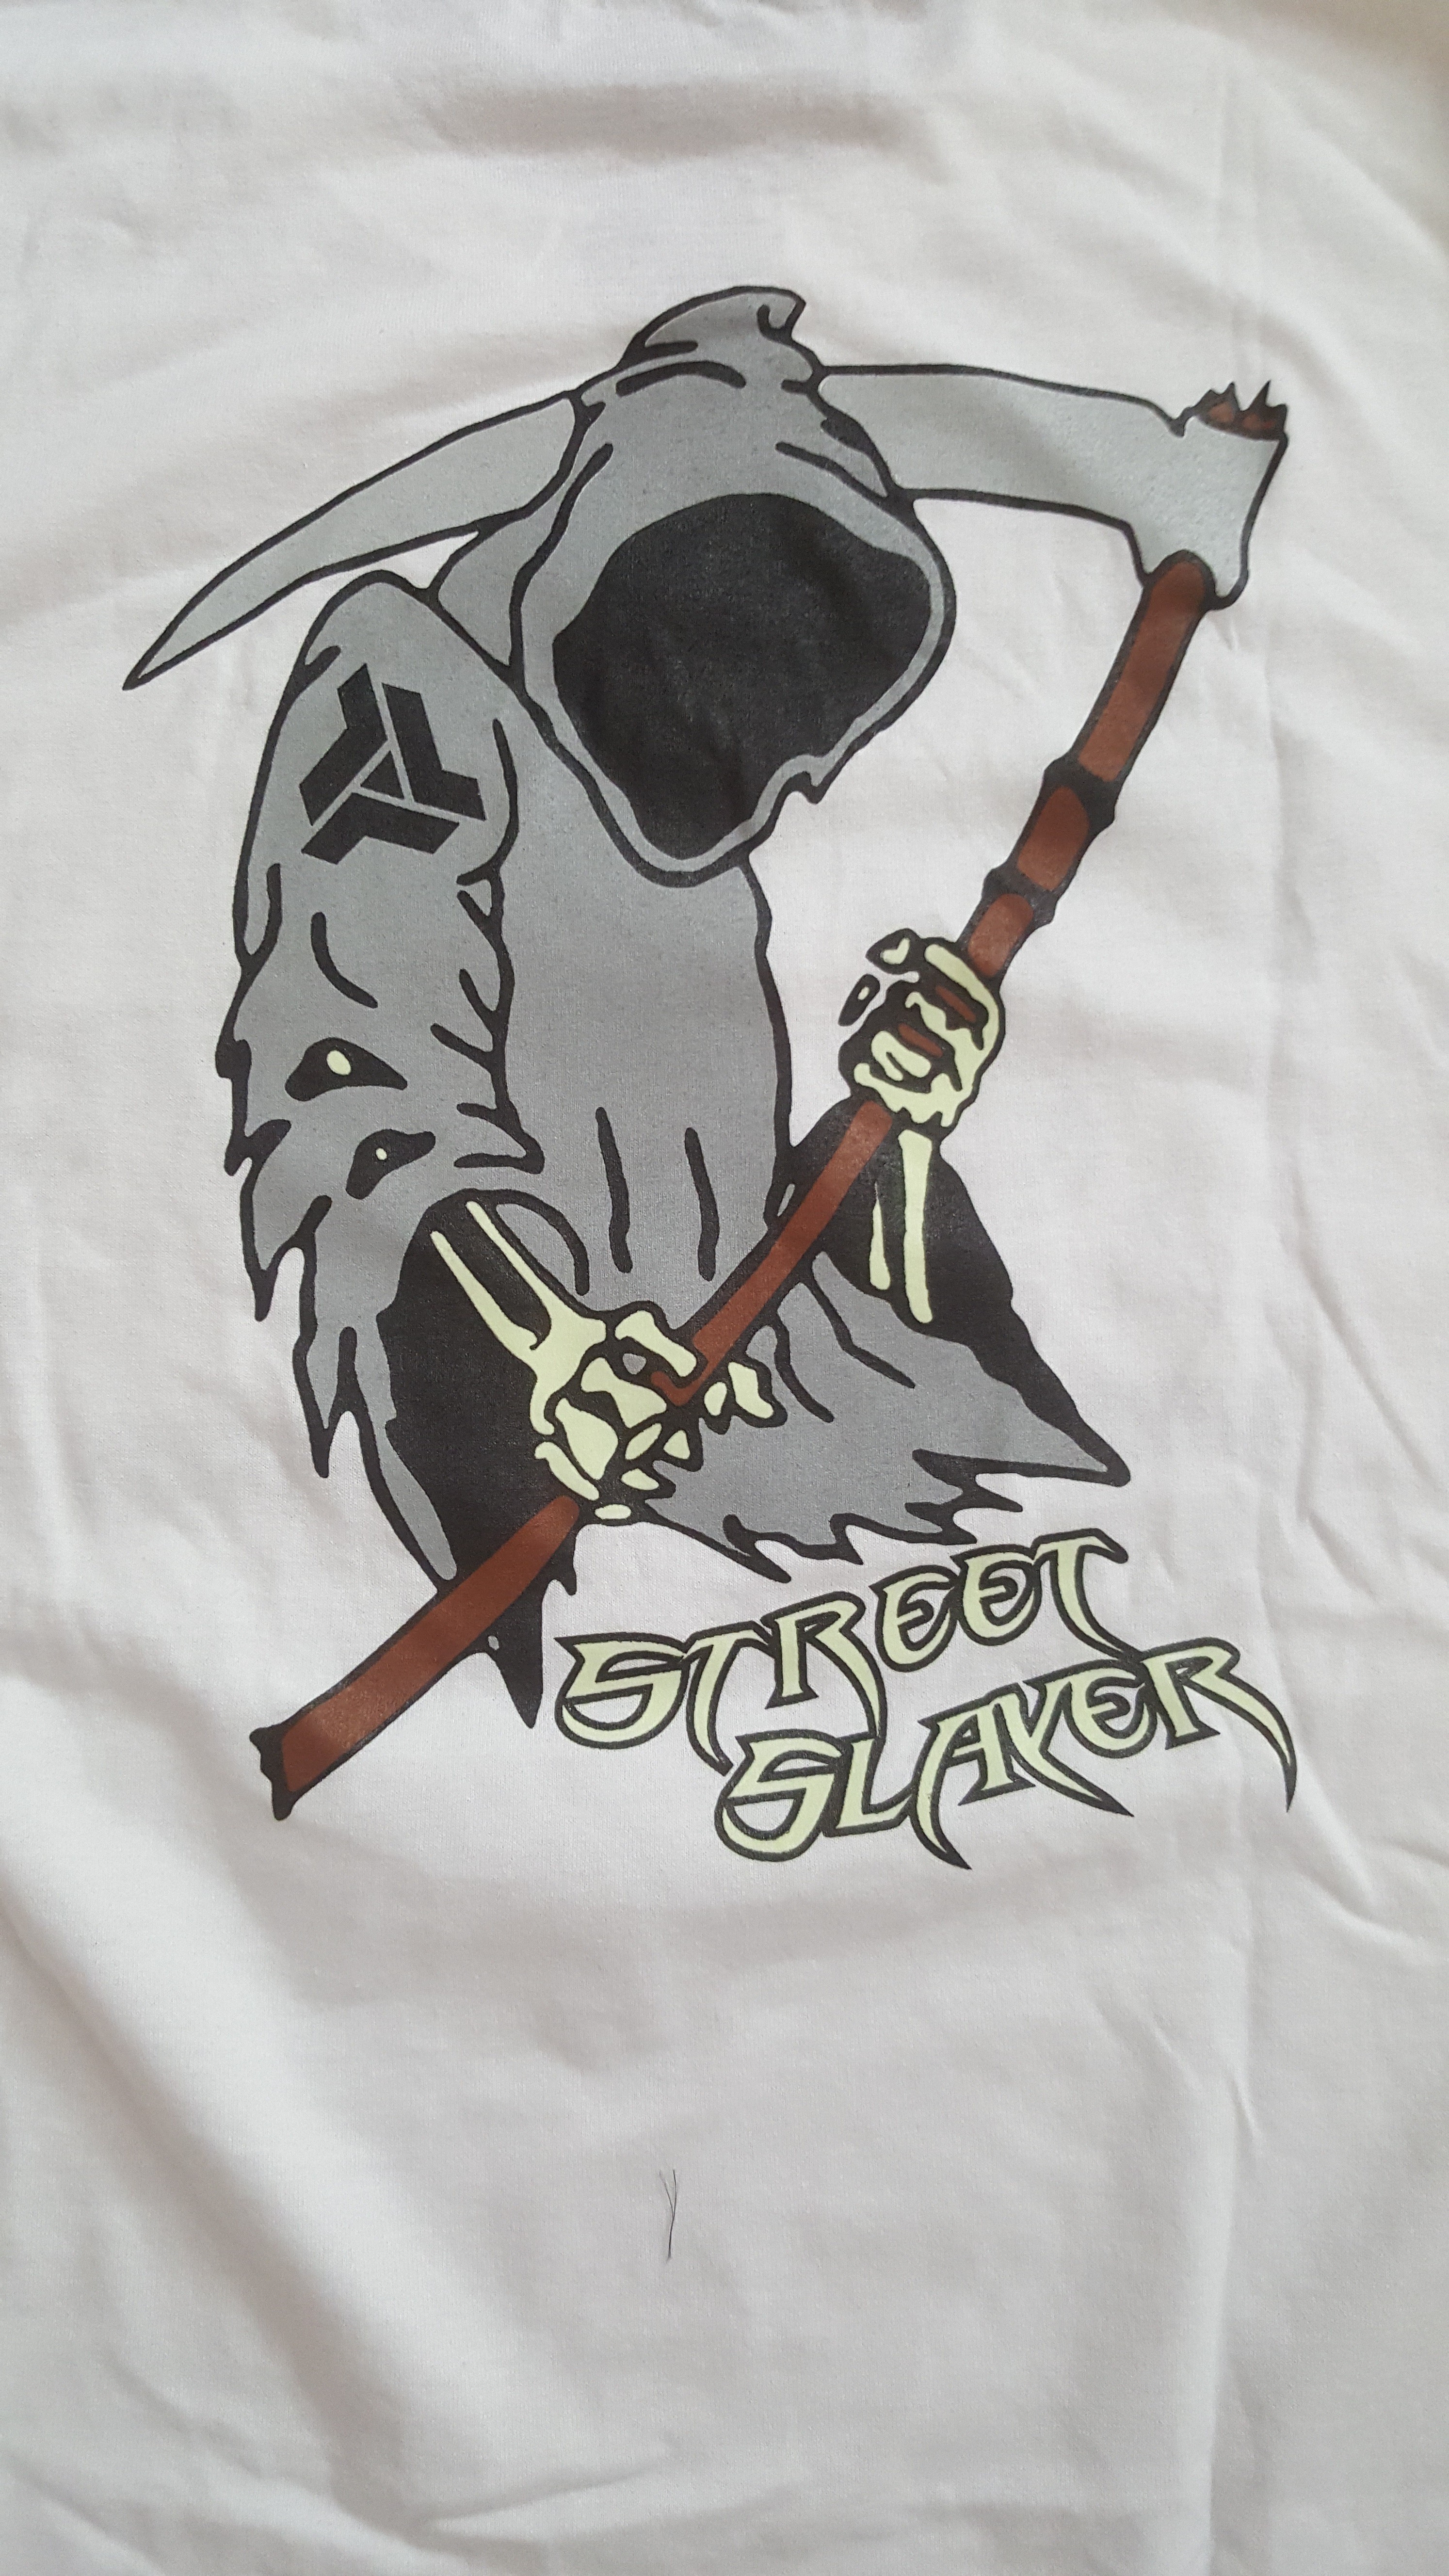 Street Slayer T-Shirts